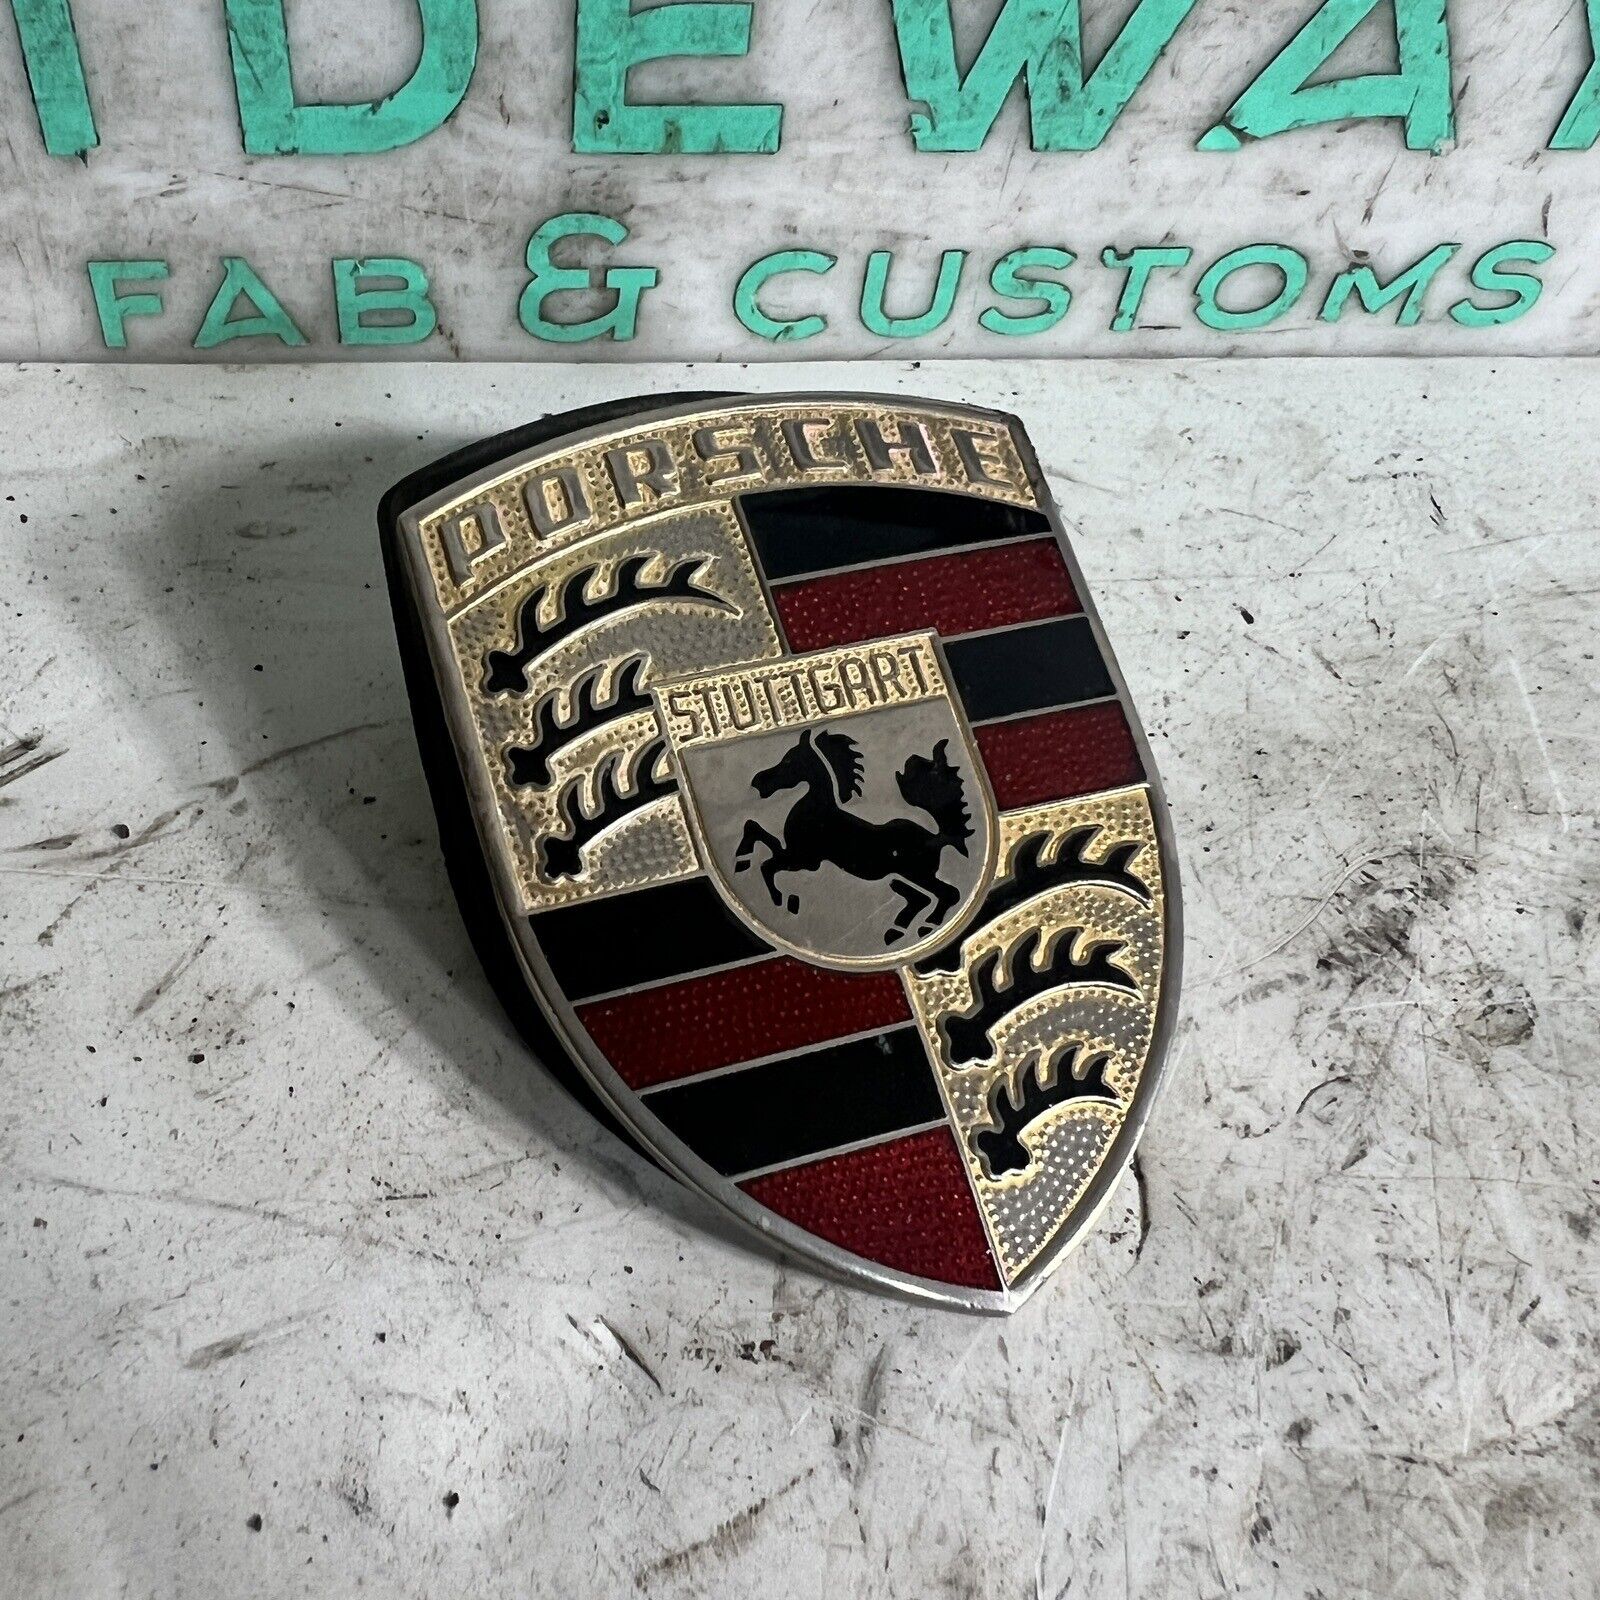 Original Porsche Gold Front Hood Emblem Badge 911 914 930 928 924 944 968